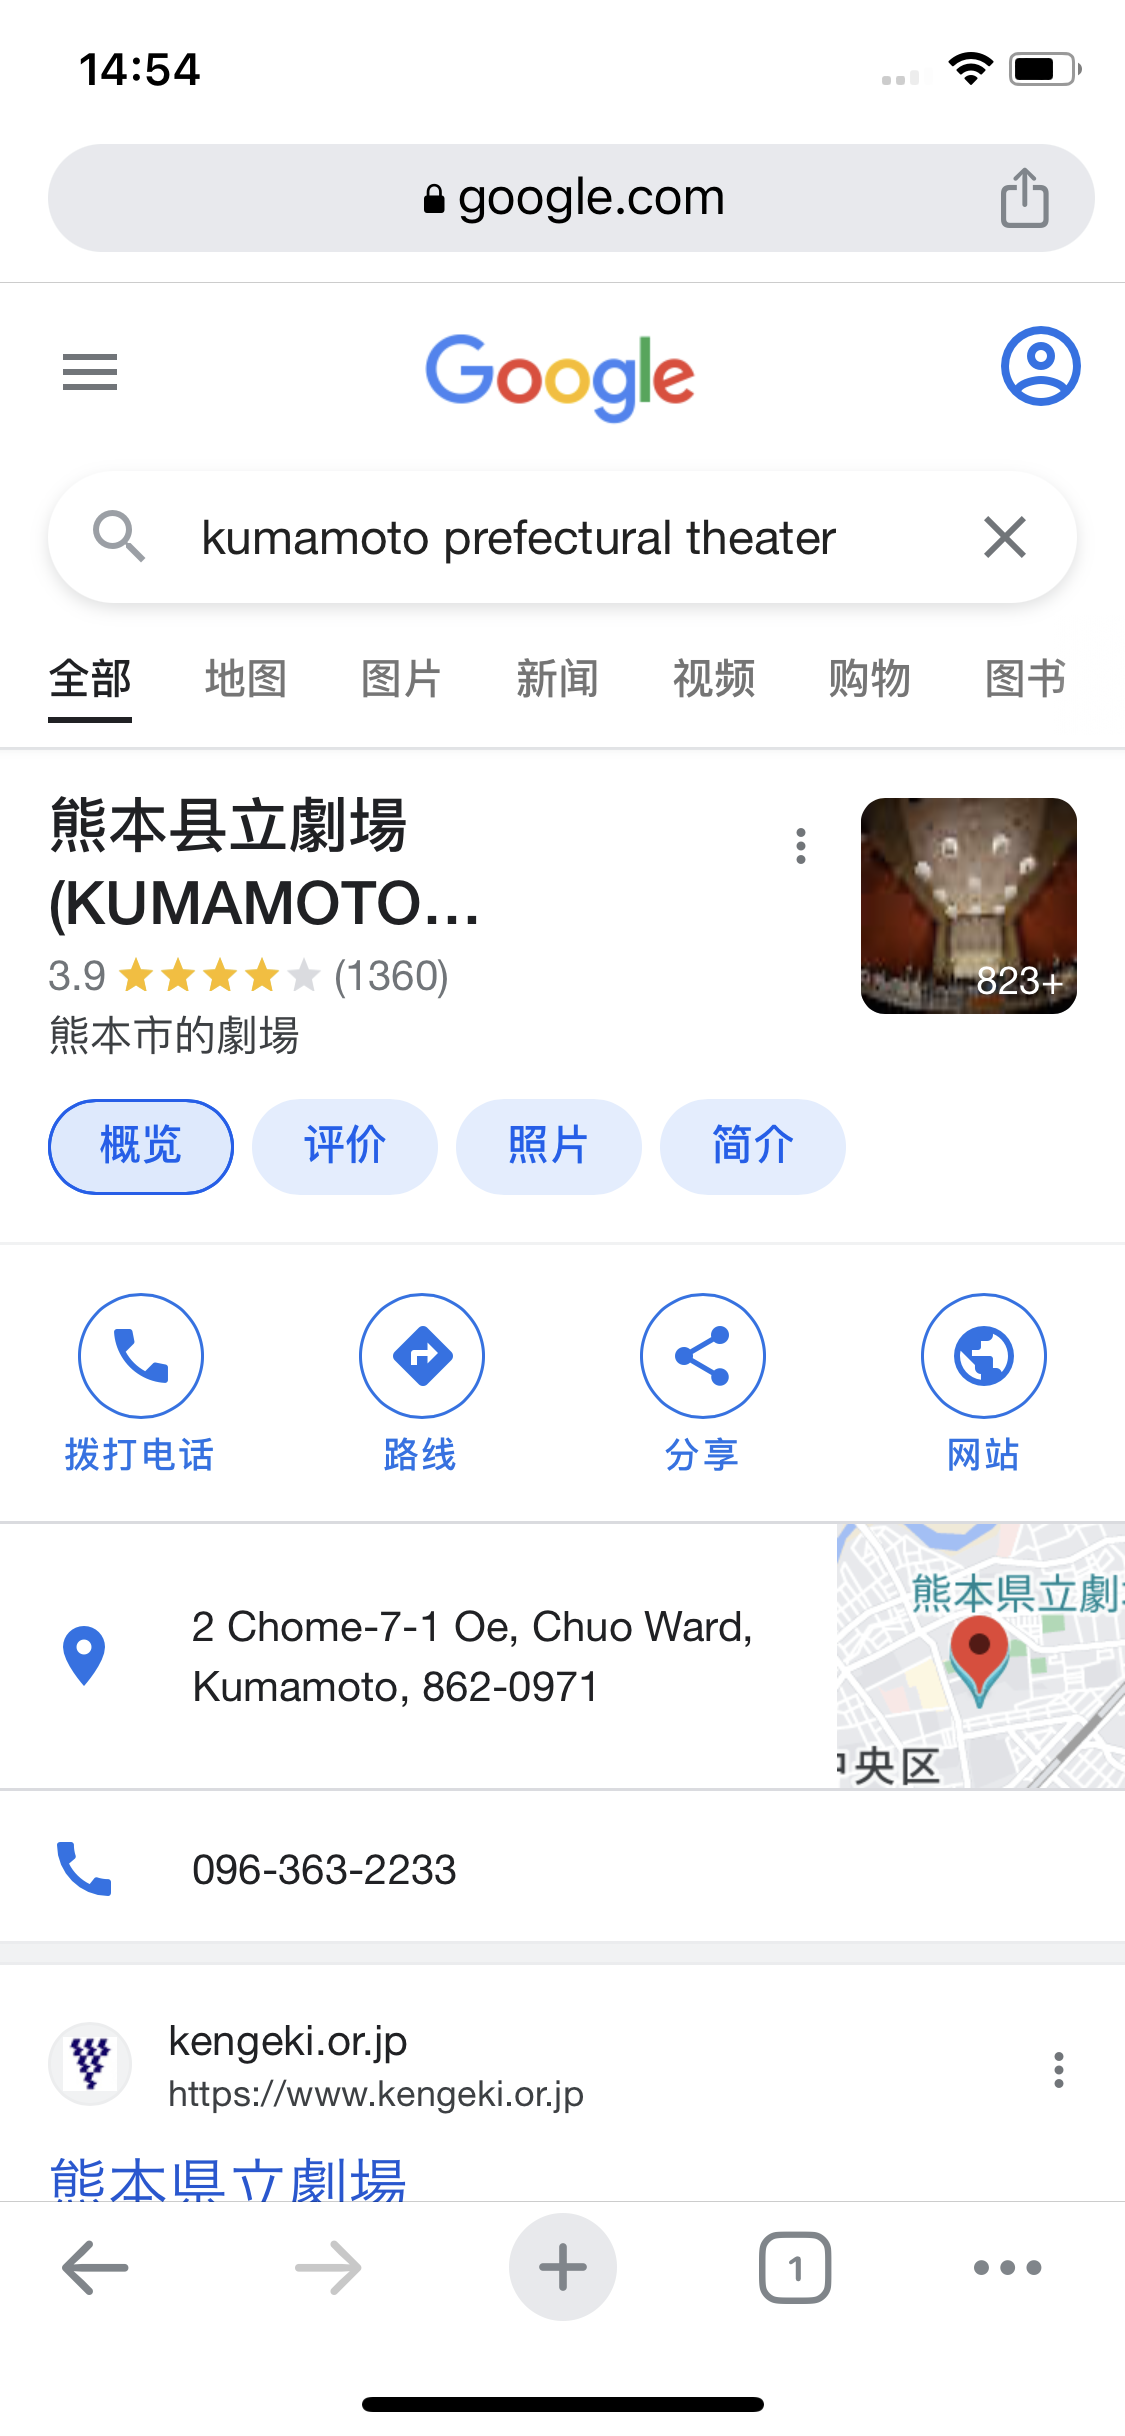 Search kumamoto prefectural theater